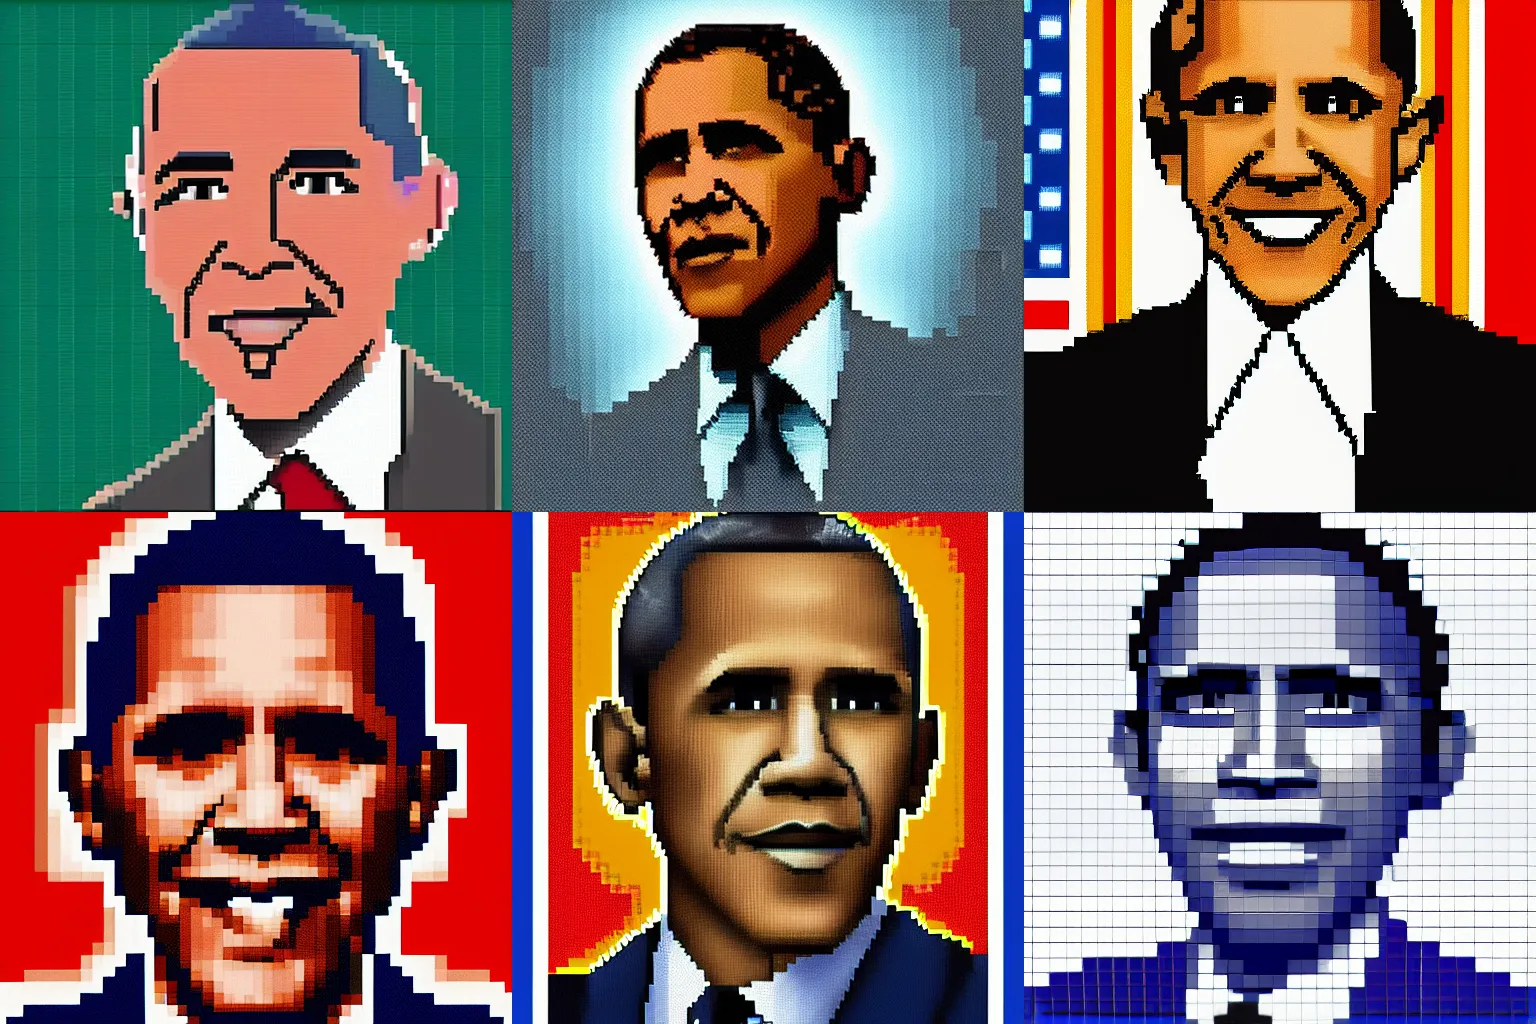 Prompt: Pixel art of Barack Obama, trending on artstation